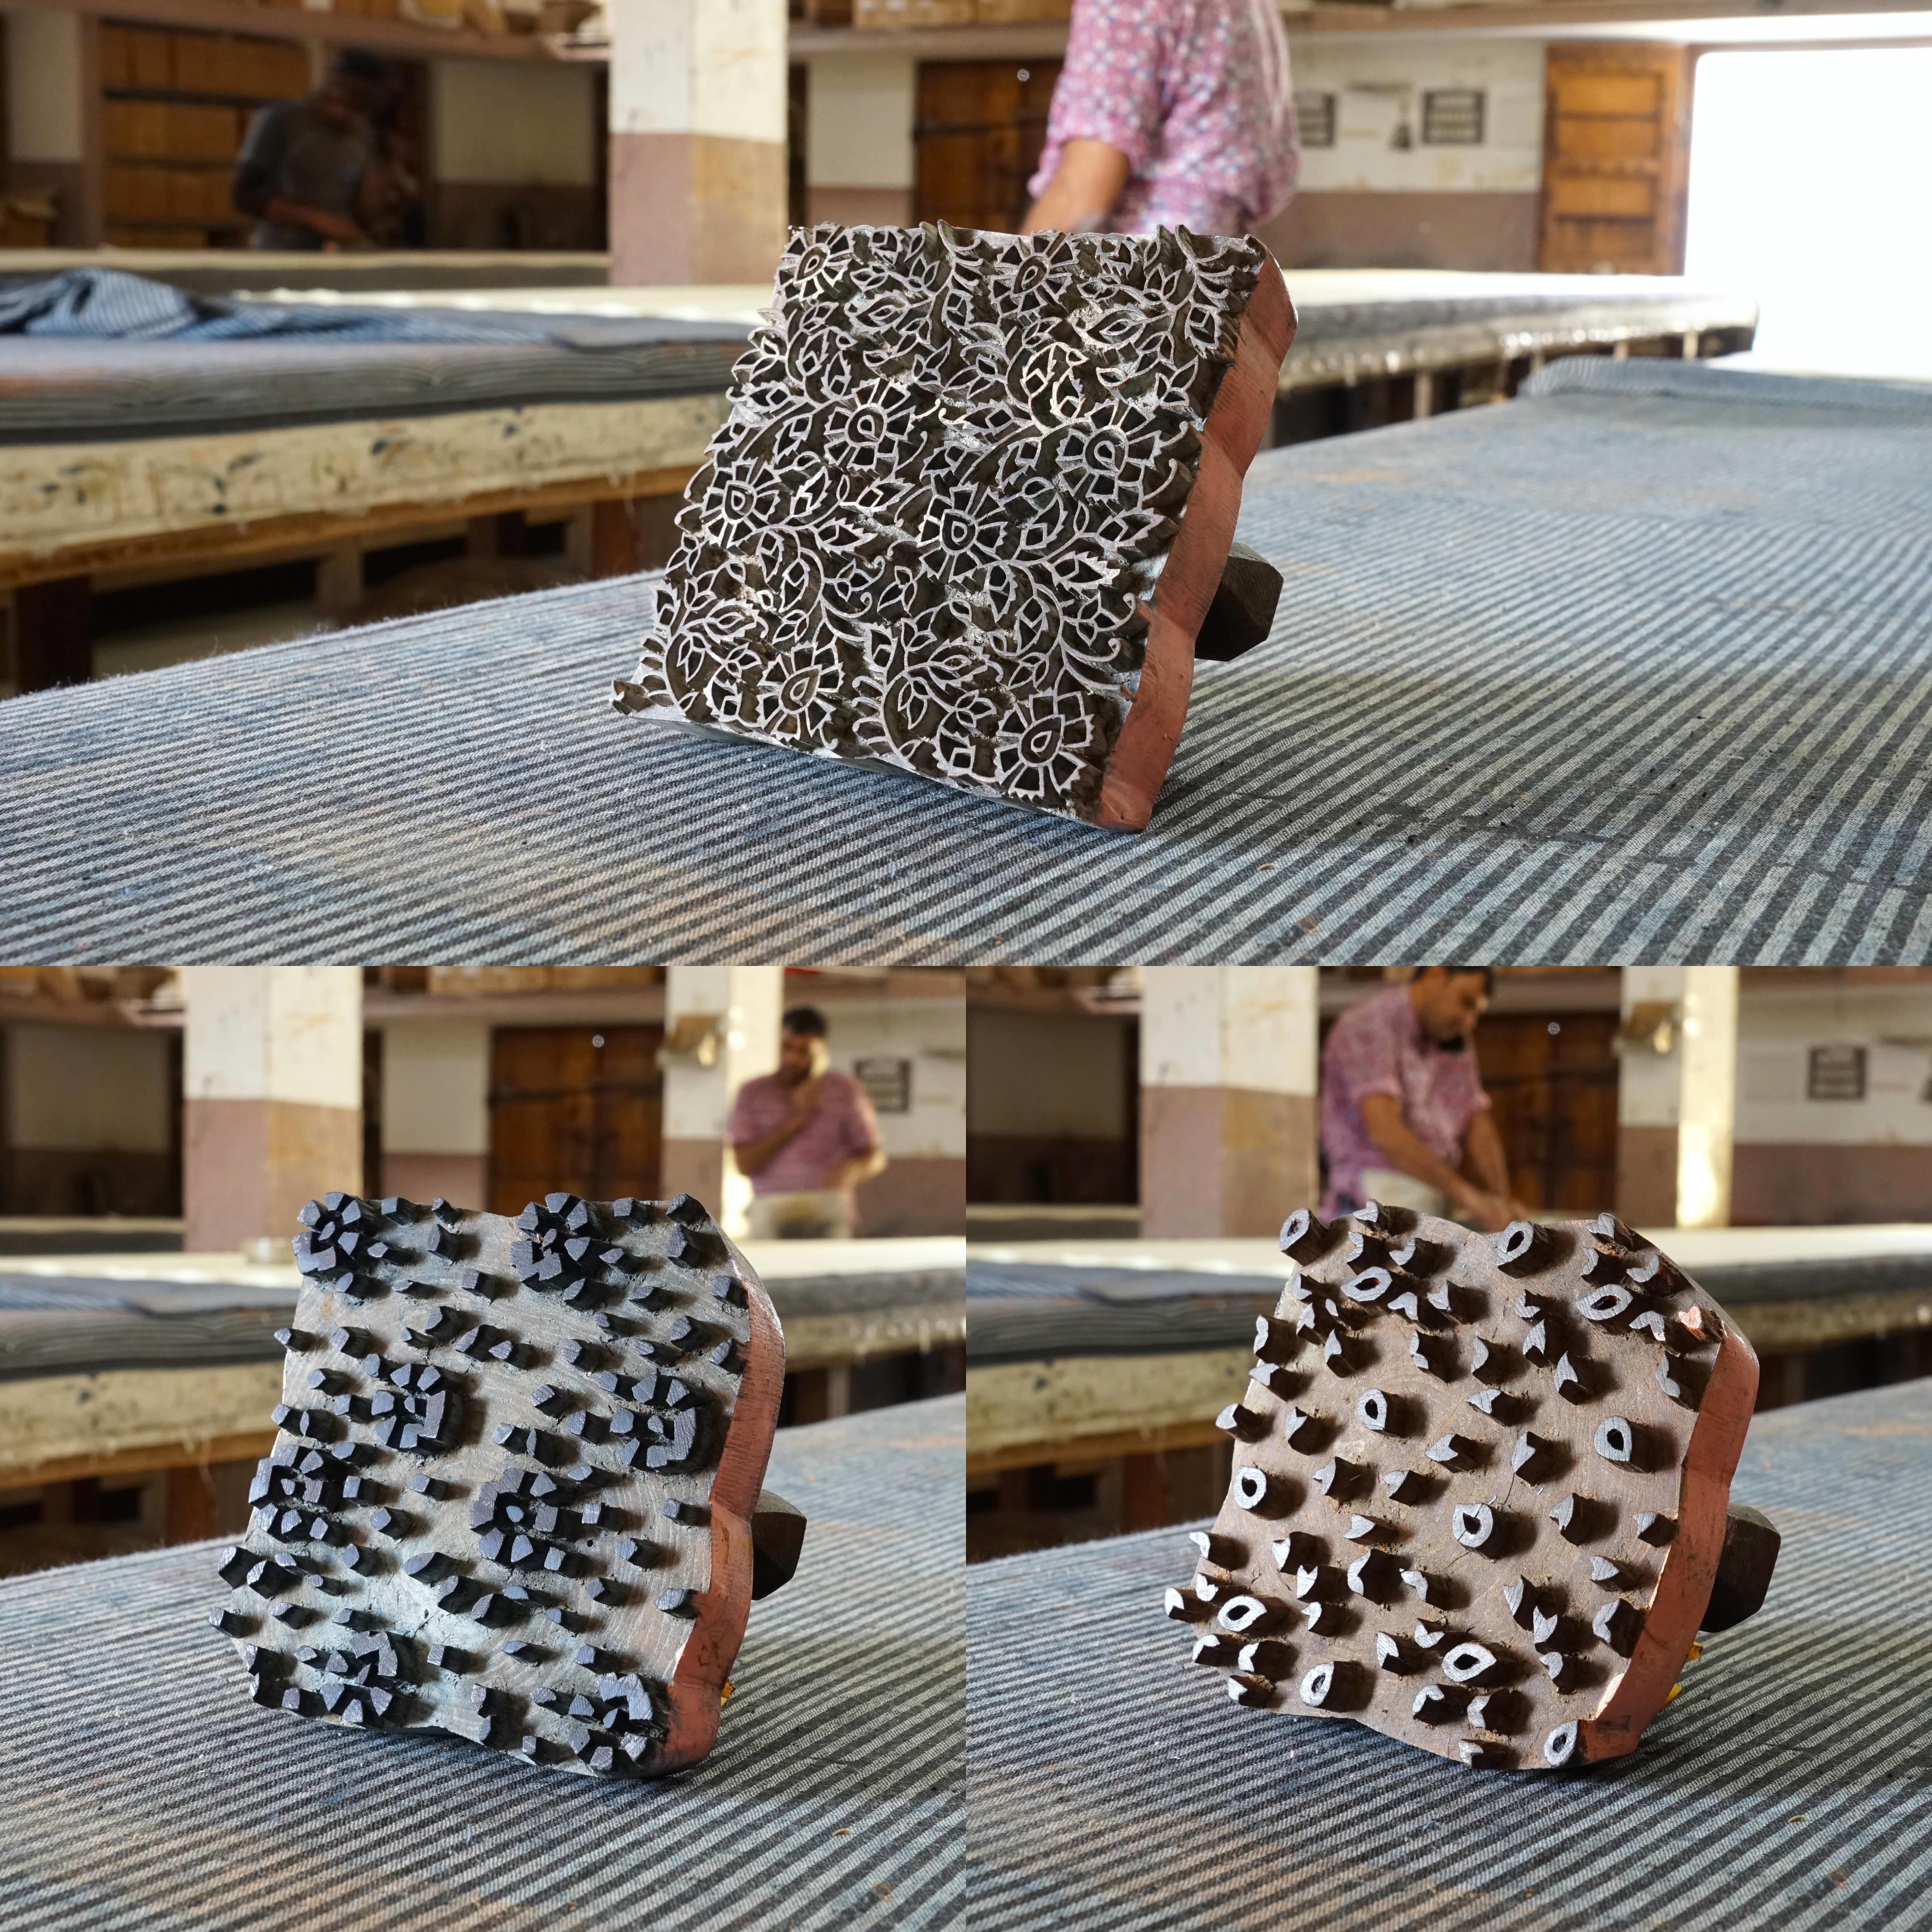 SIK37 - Indian Block-Printed Cotton - Nujiang Design - Indigo, Alizarin and Black Dye - Blocks